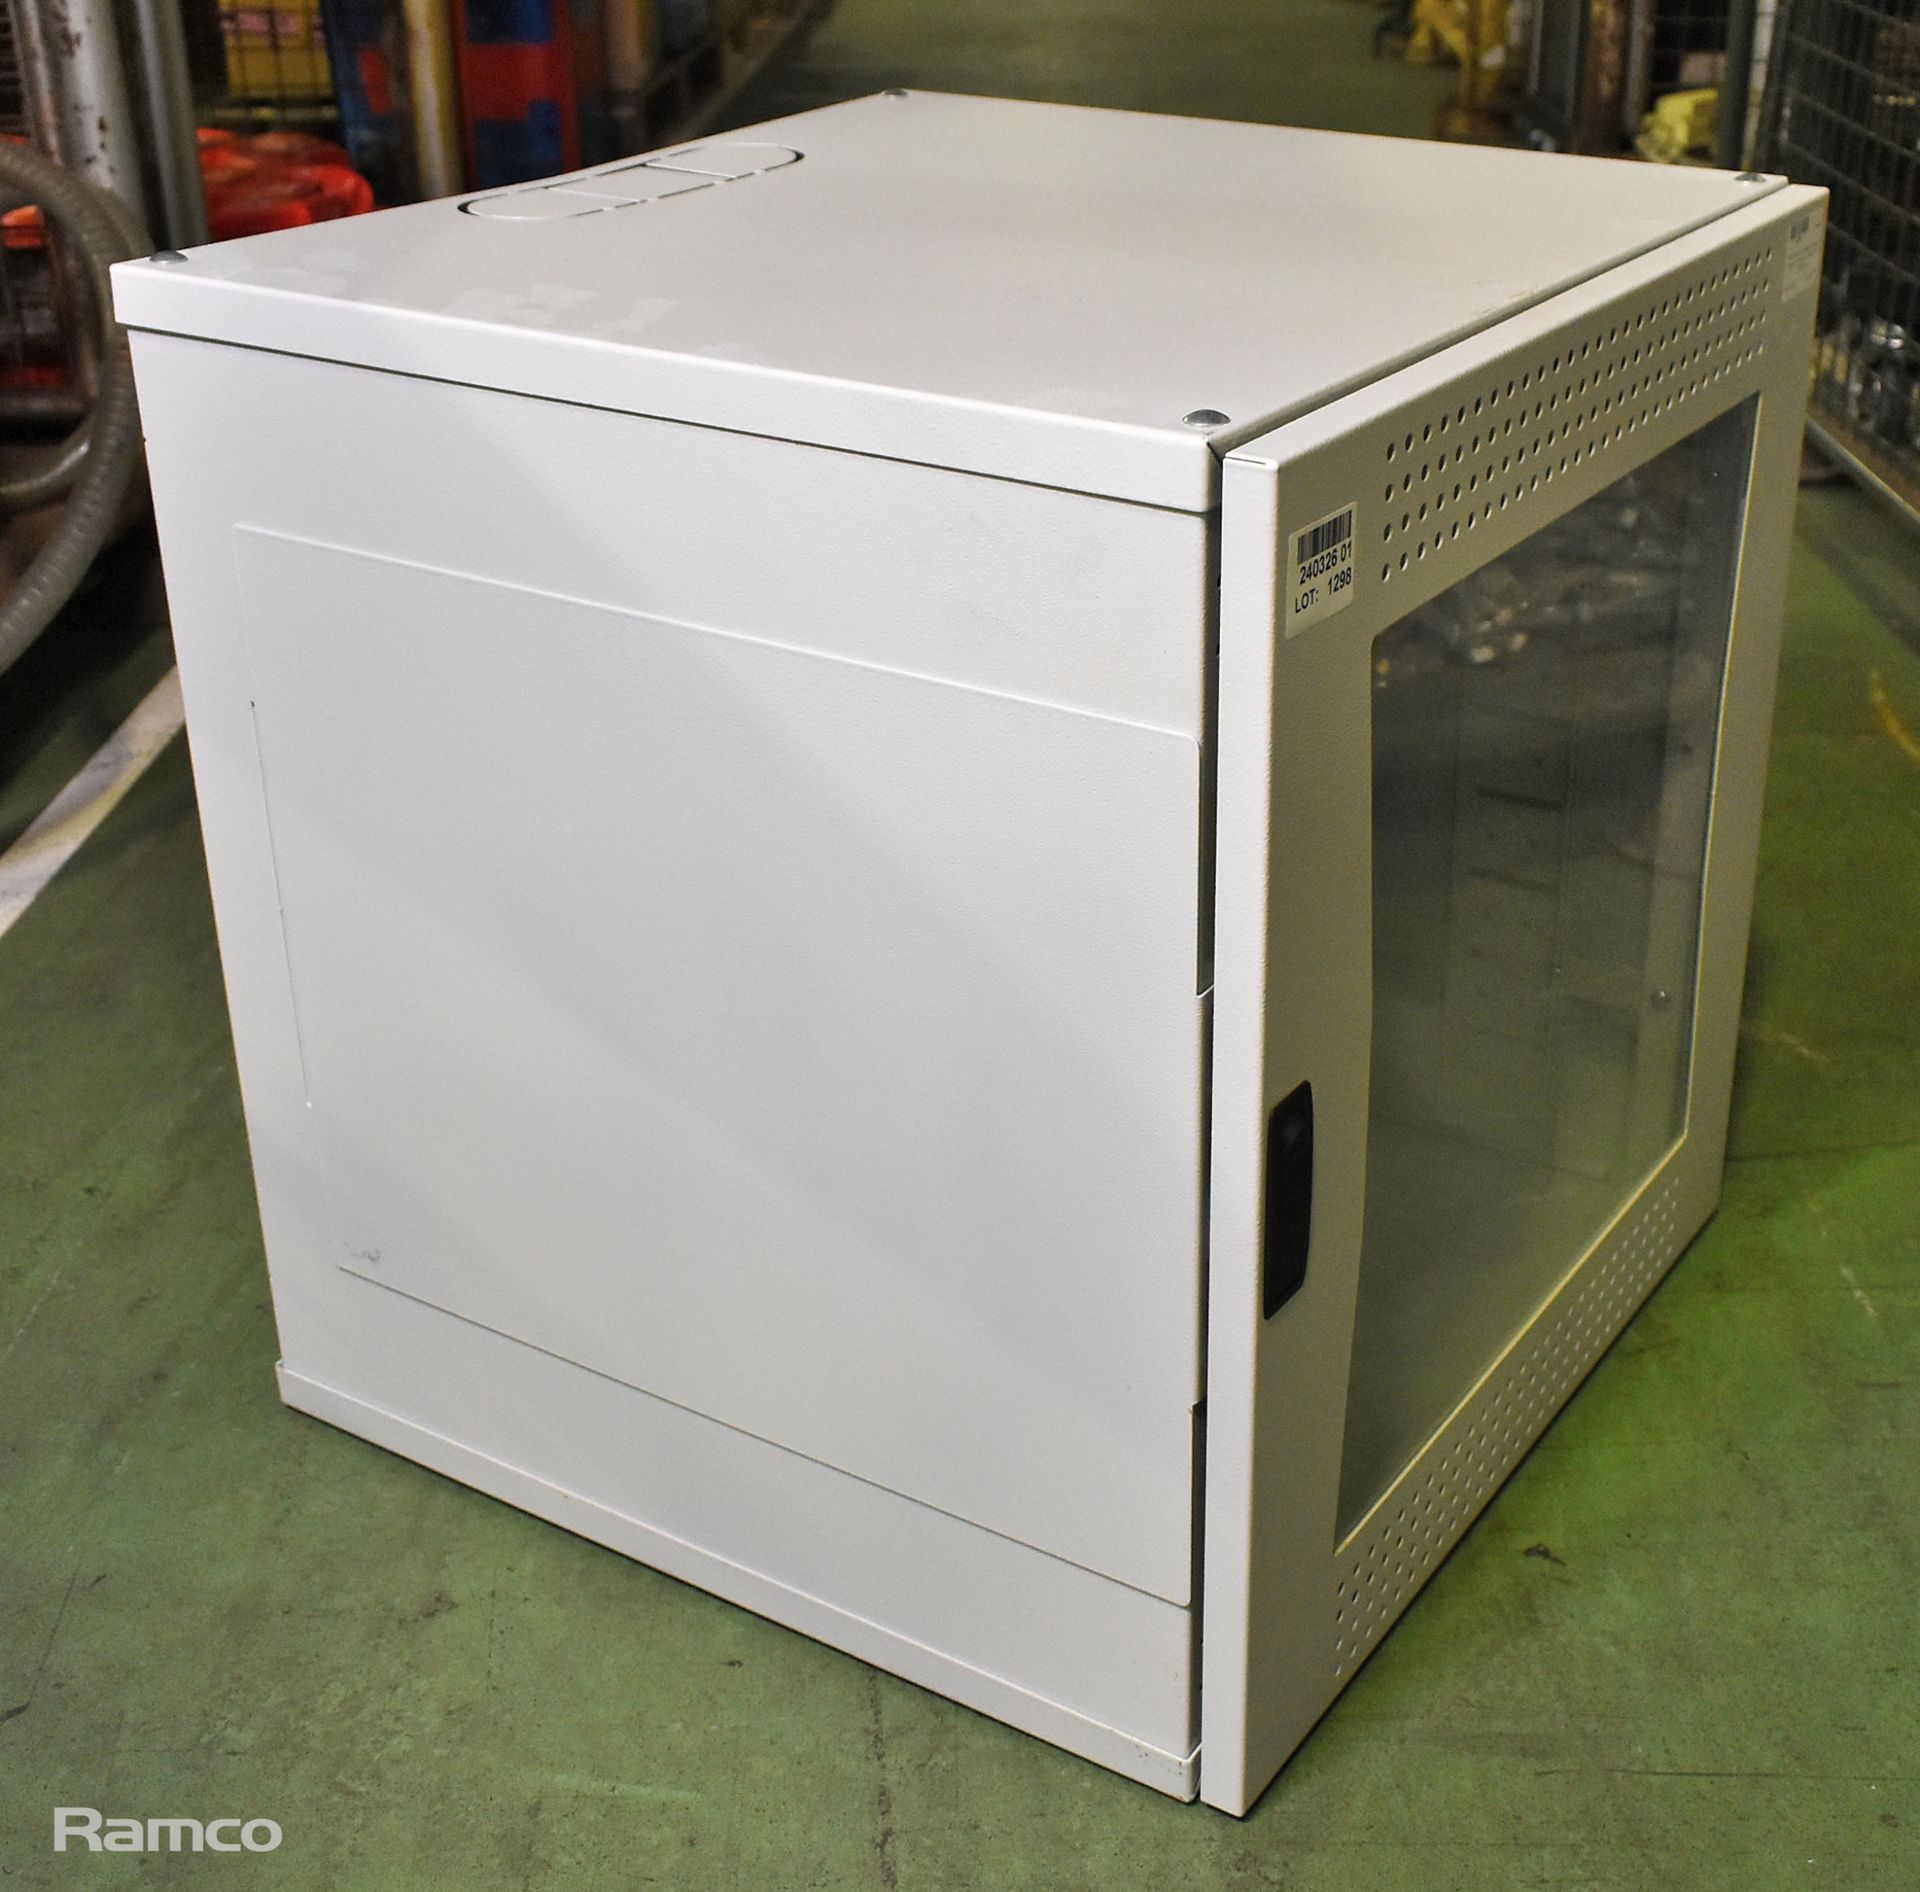 Rittal premium wallbox server cabinet - W 600 x D 600 x H 600mm - Image 4 of 5